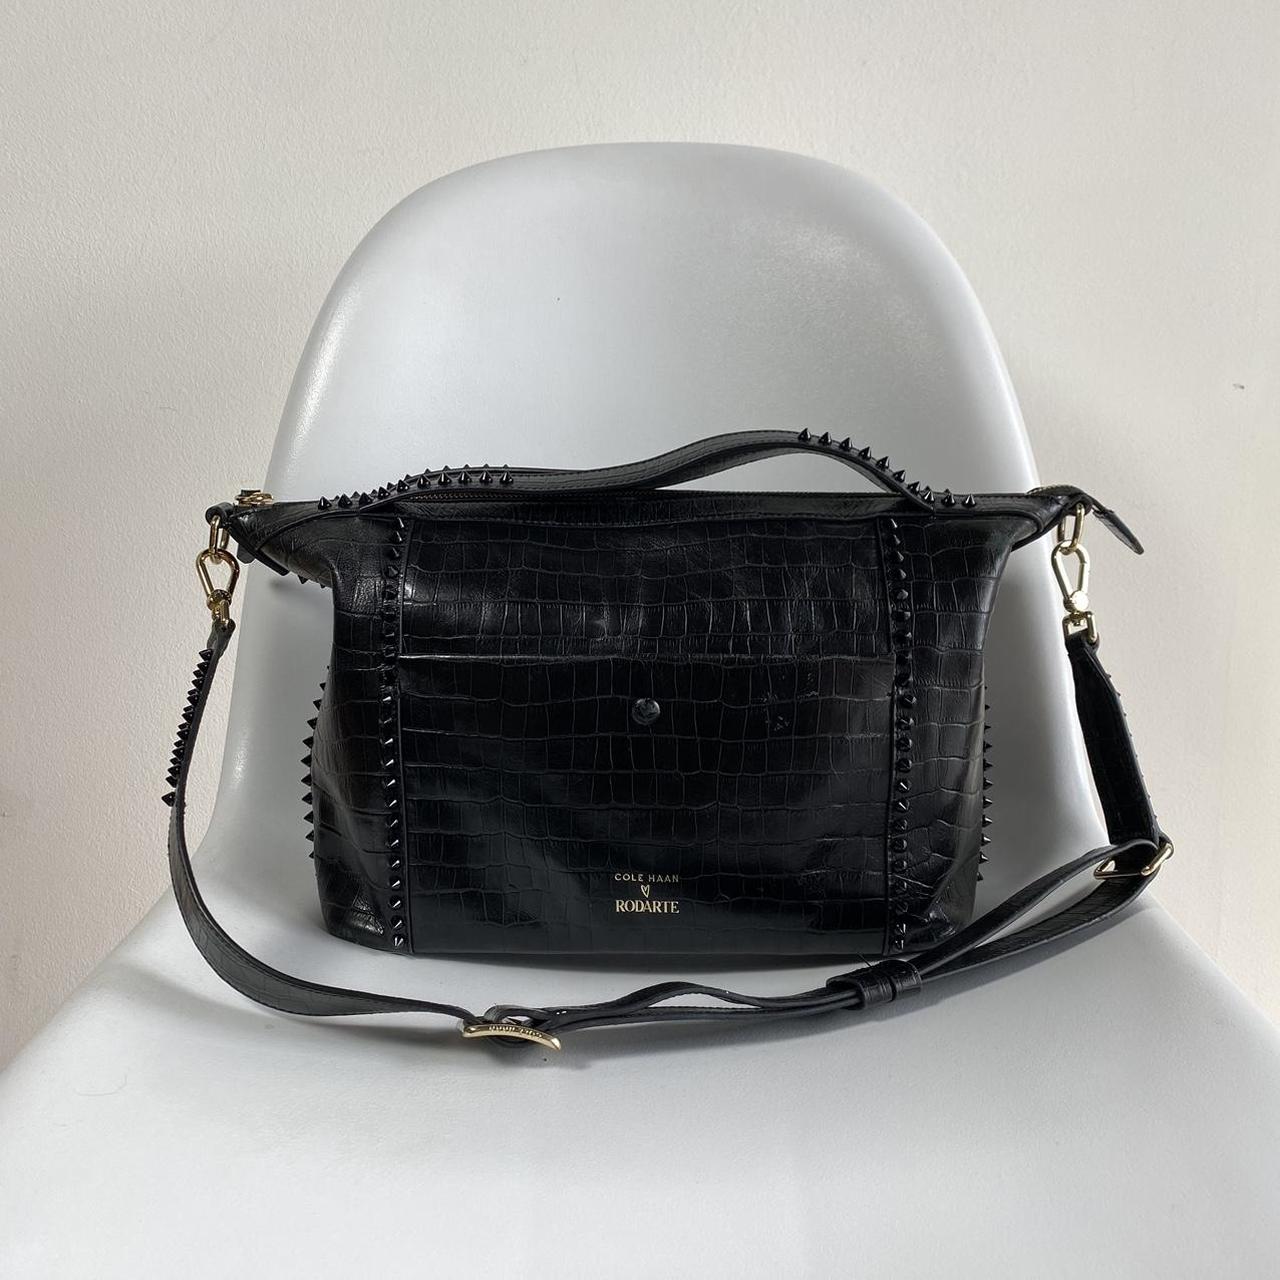 COLE HAAN Black Woven Small Leather Crossbody Purse Bag | eBay